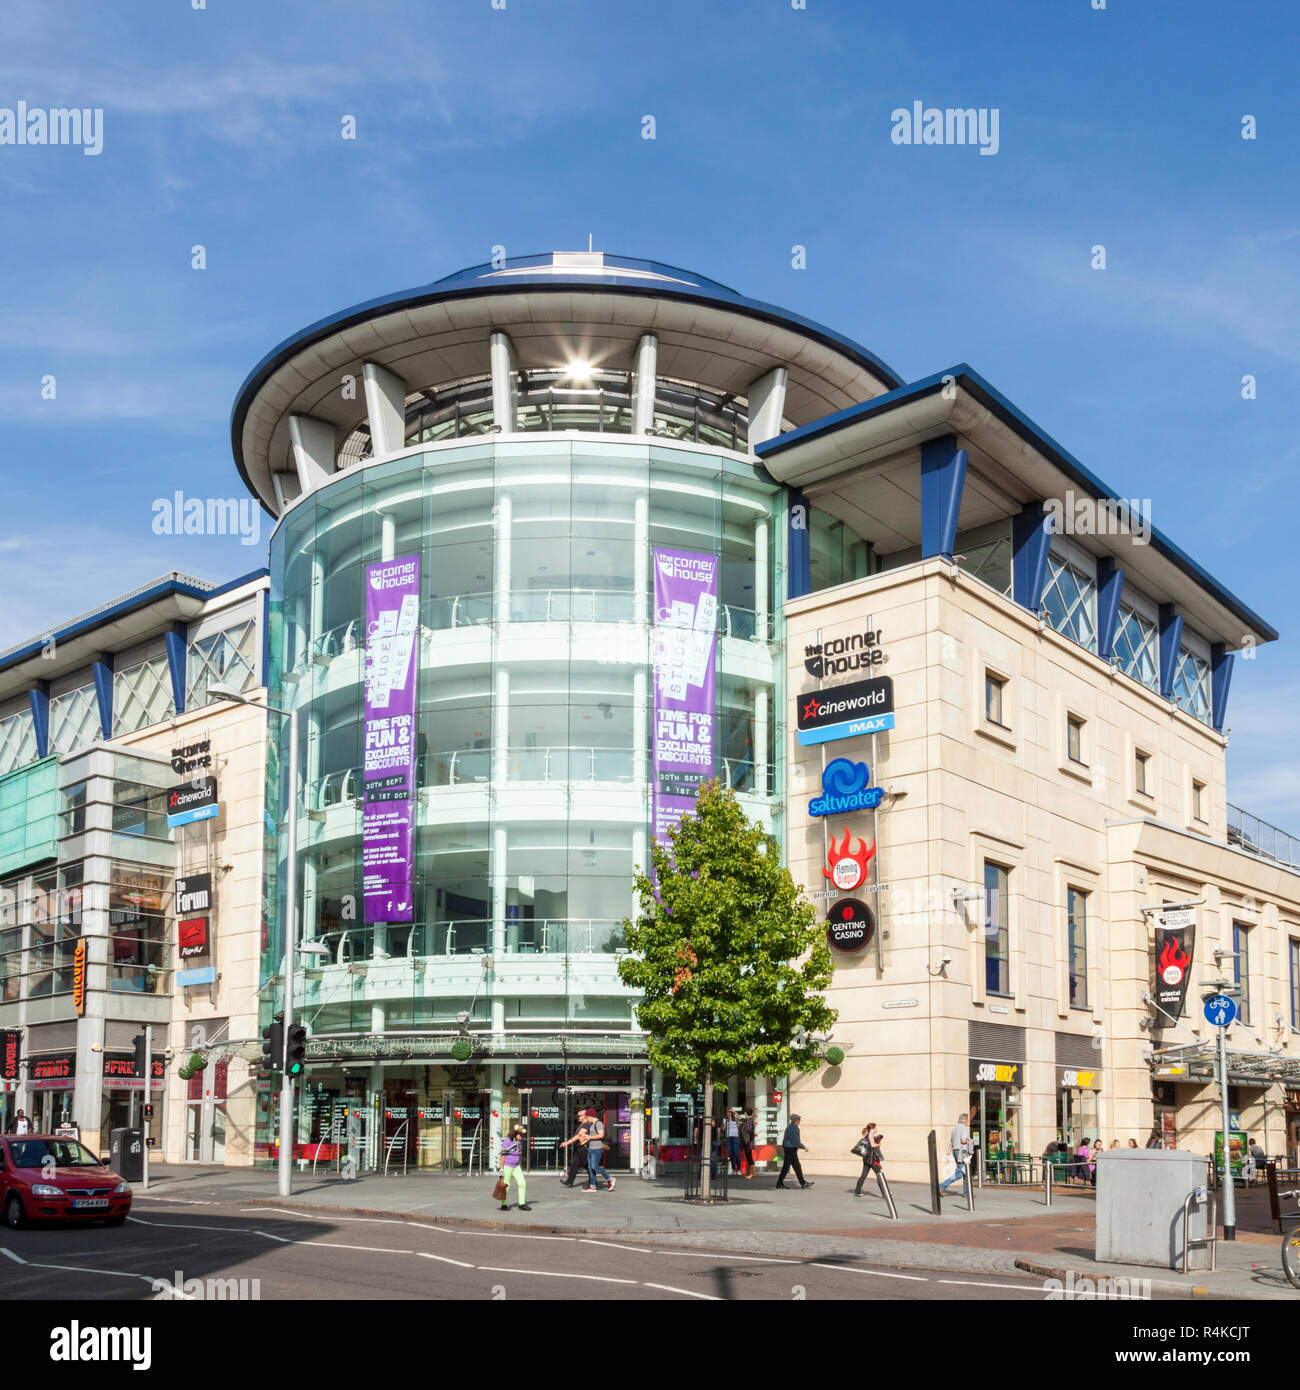 The Corner House, Nottingham, a Cineworld multiplex cinema with bars and restaurants. Nottingham, England, UK Stock Photo